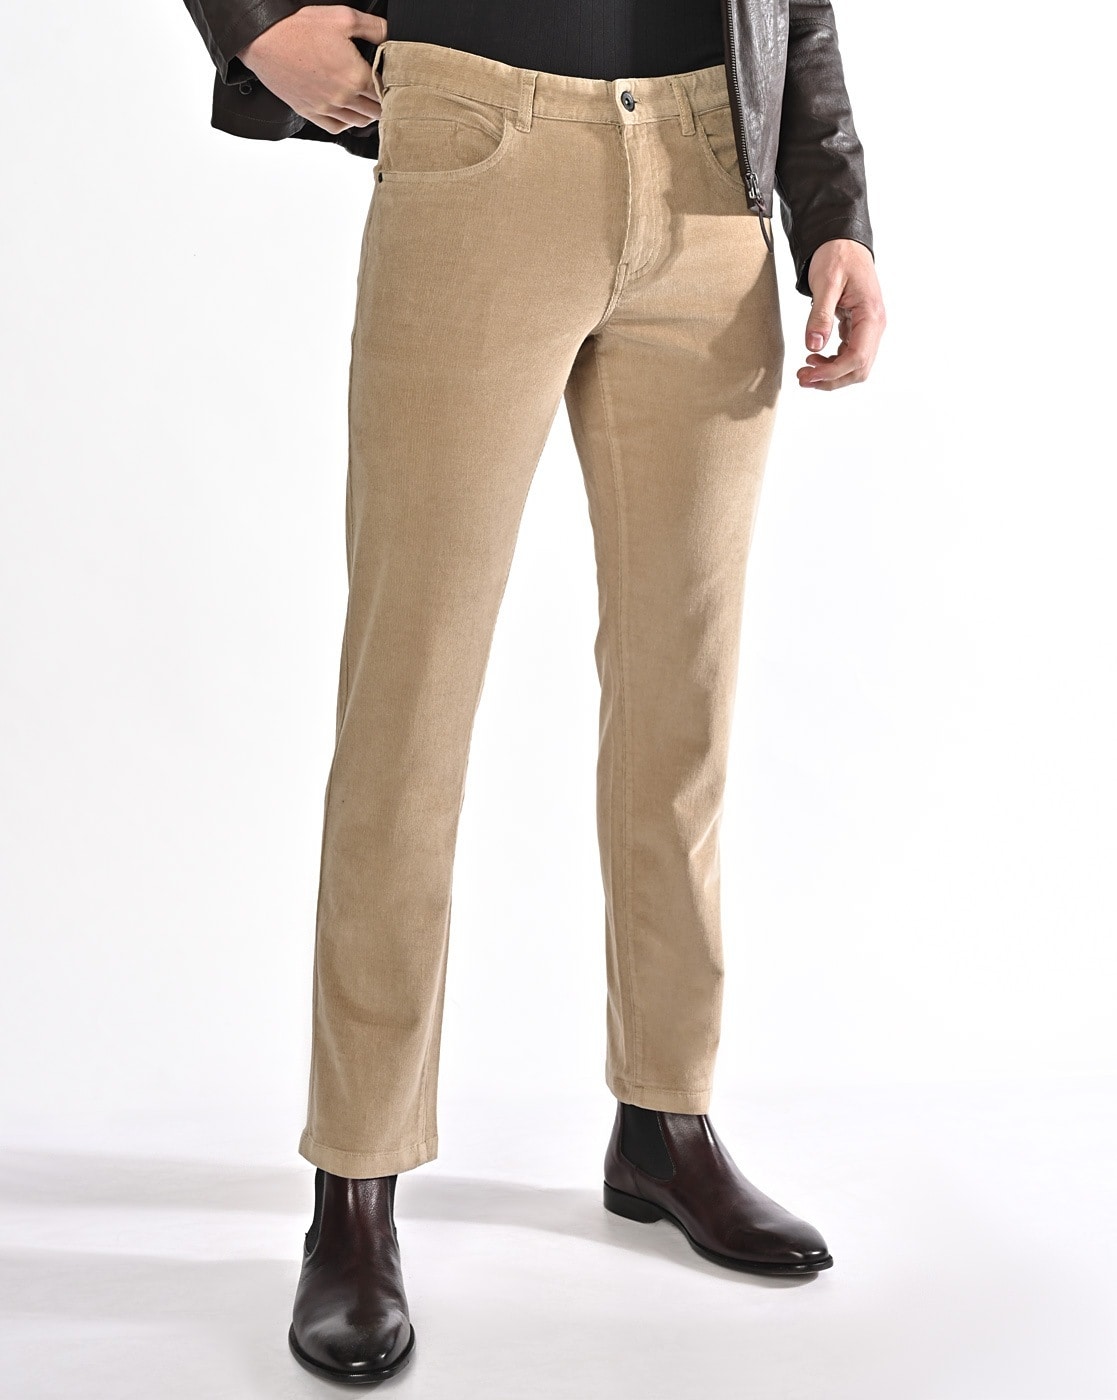 Shop for Men - Buy Stylish Clothes for Men Online | Pantaloons